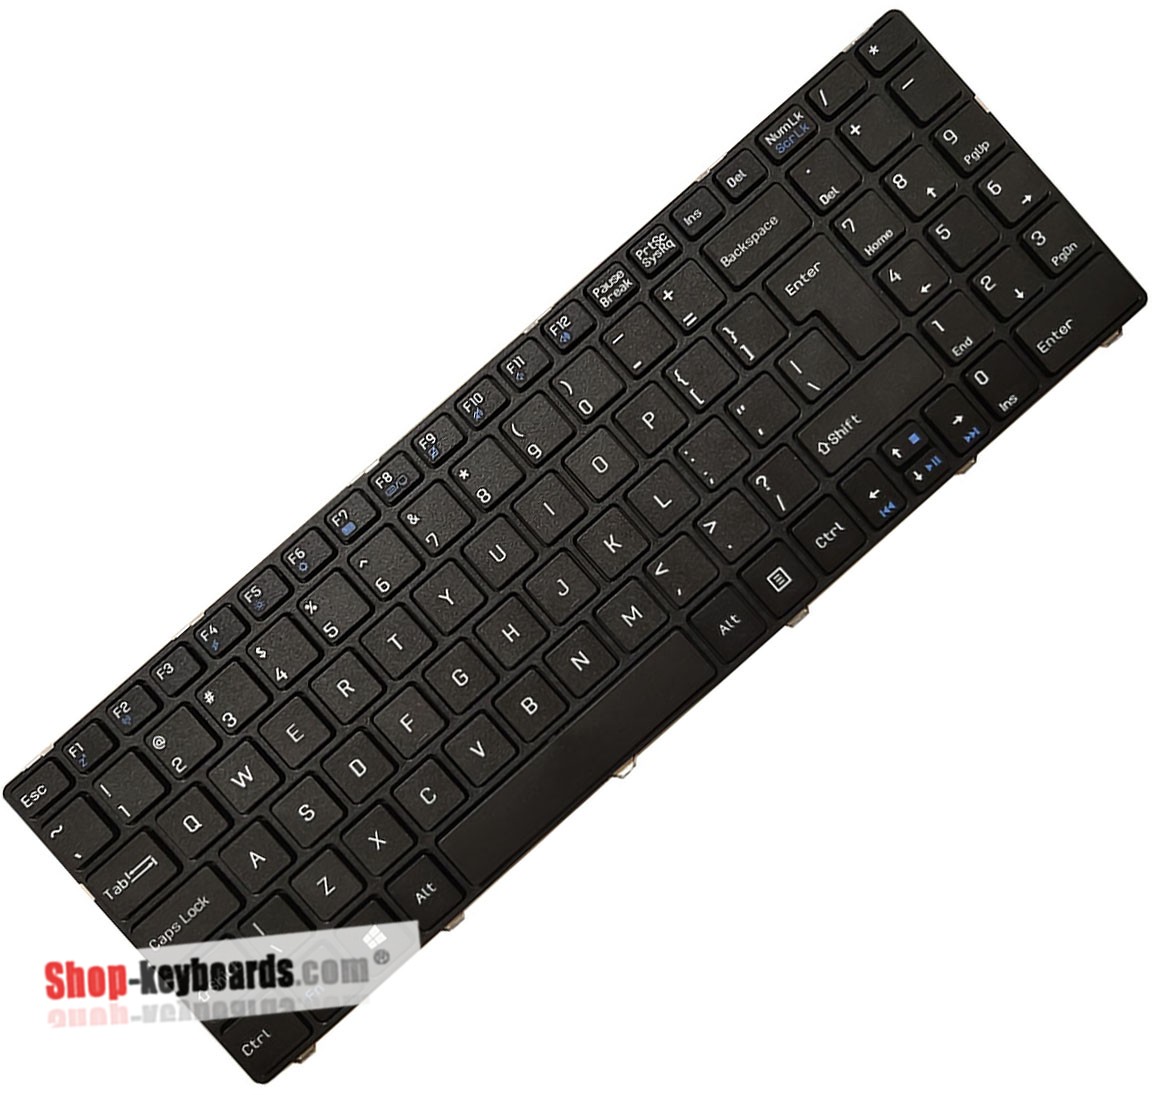 Medion akoya E7219 Keyboard replacement